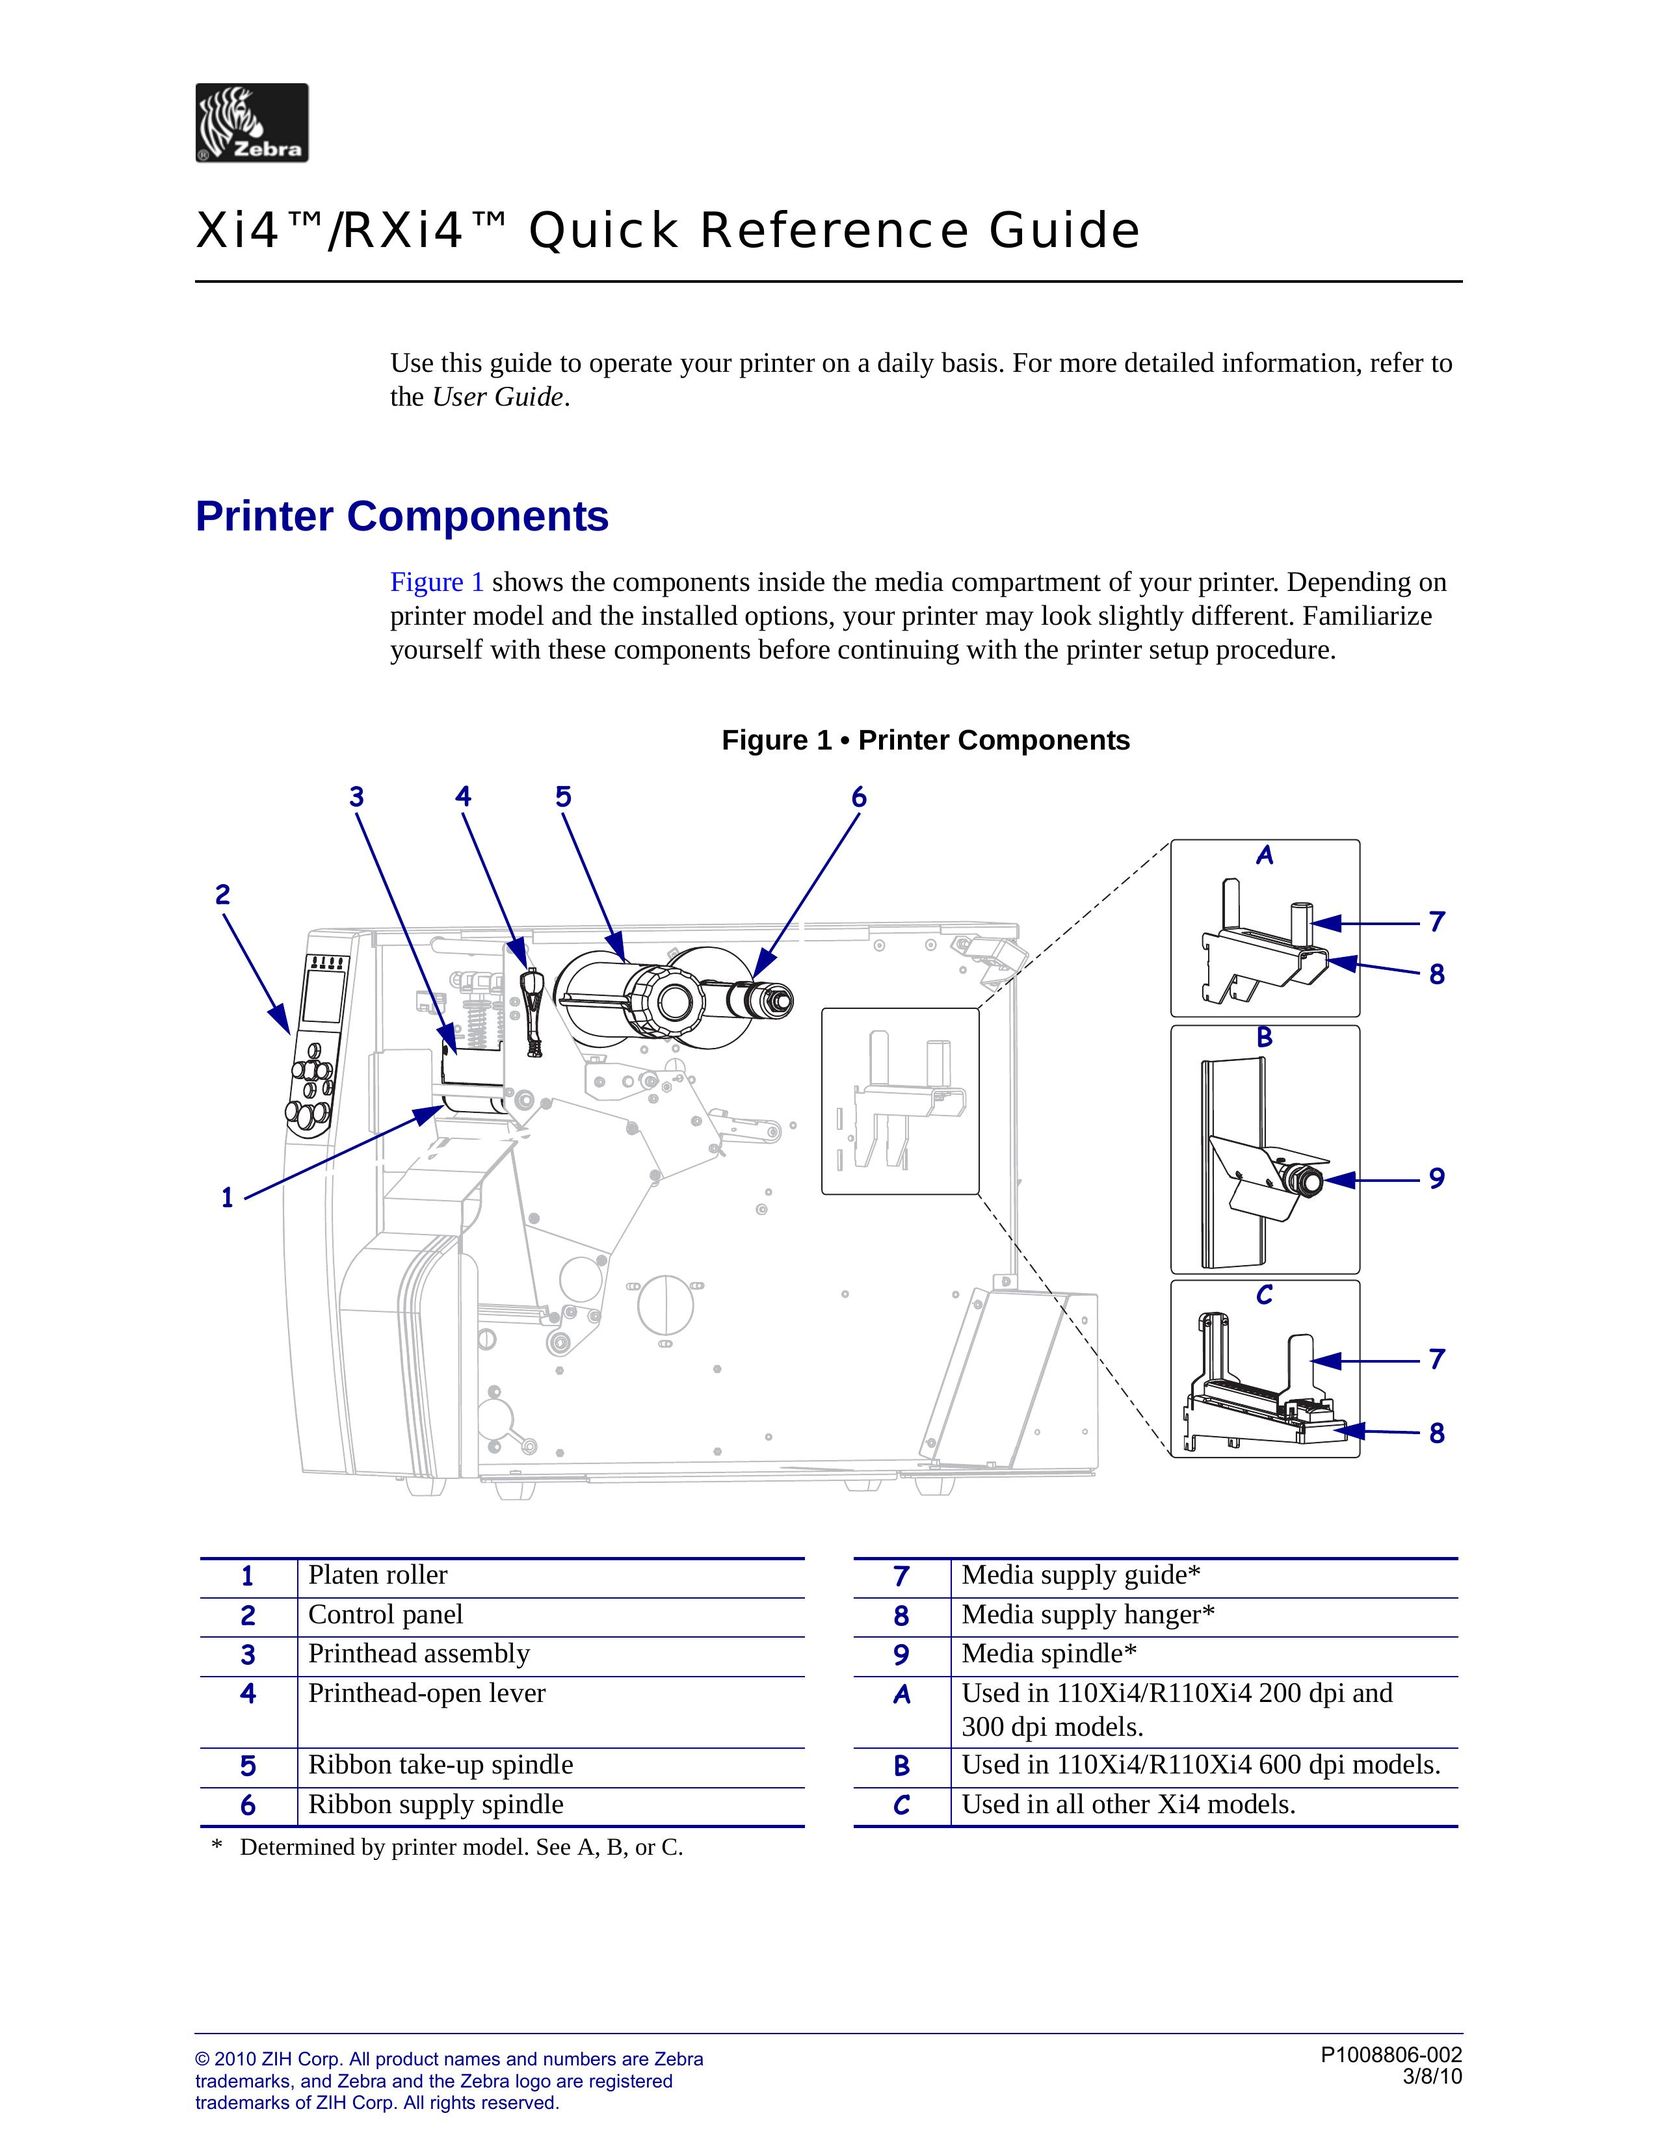 Zebra Technologies Xi4 All in One Printer User Manual